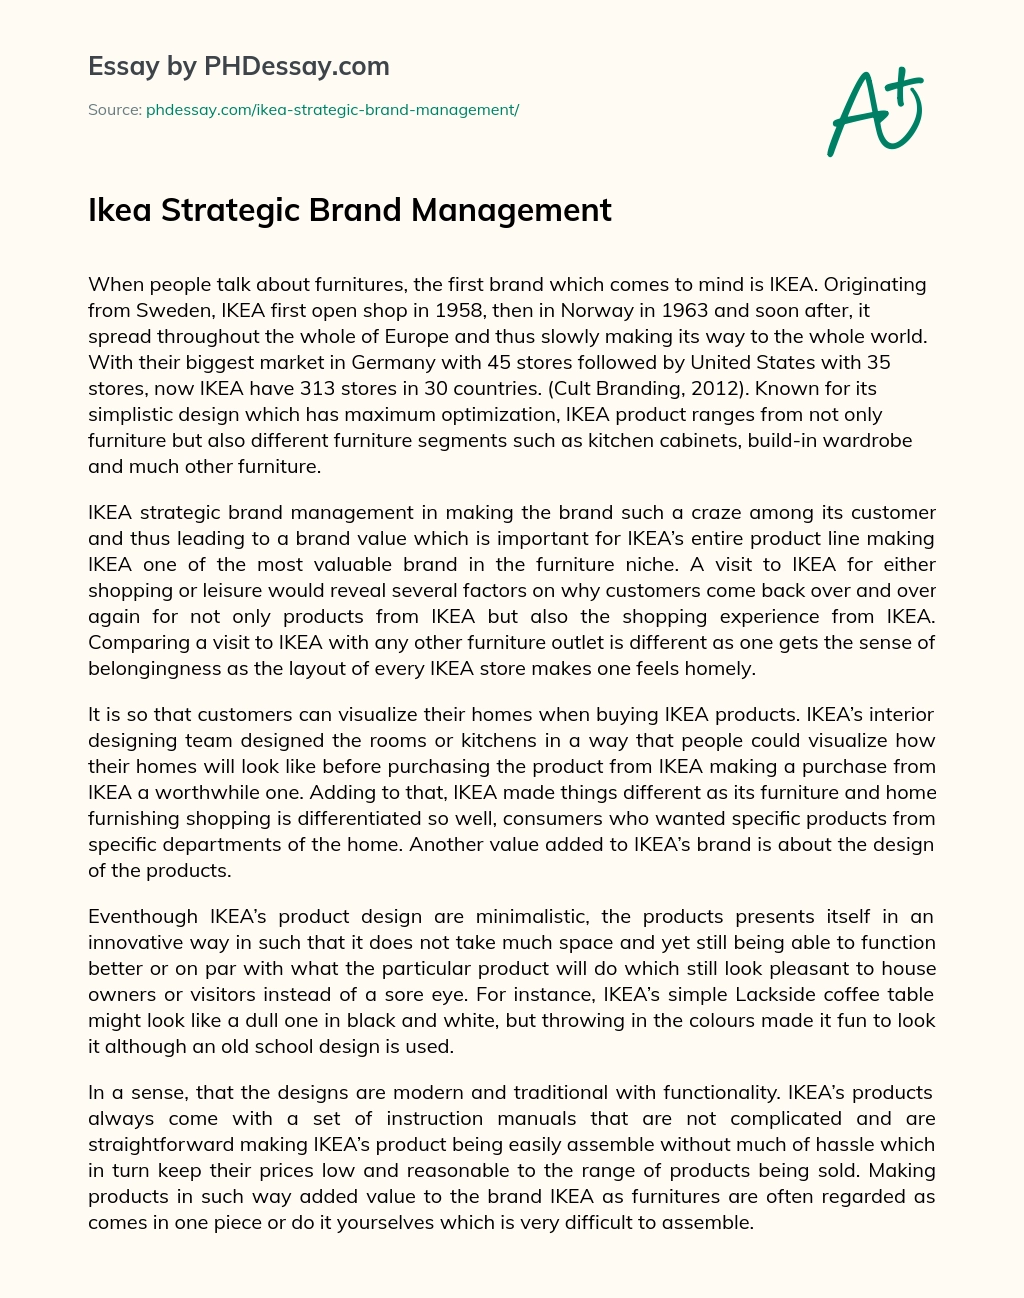 Ikea Strategic Brand Management essay